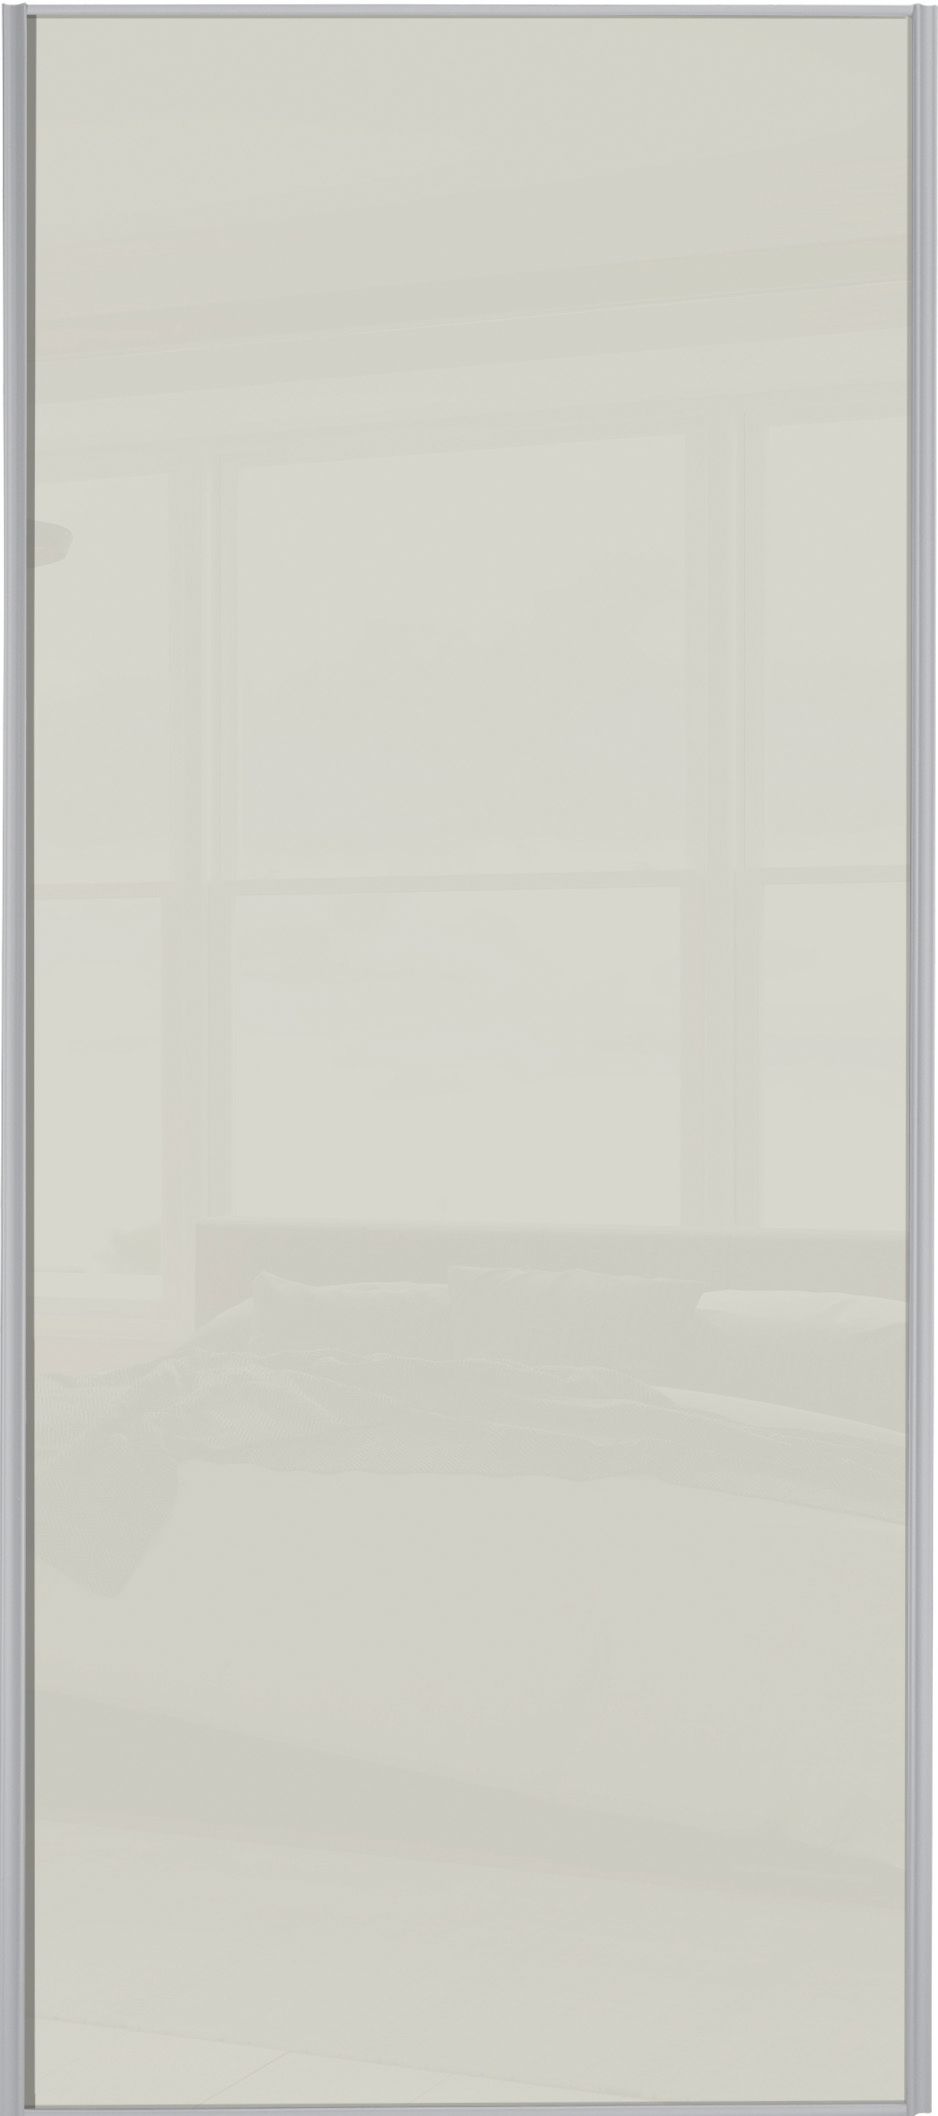 Spacepro Sliding Wardrobe Door Silver Framed Single Panel Arctic White Glass